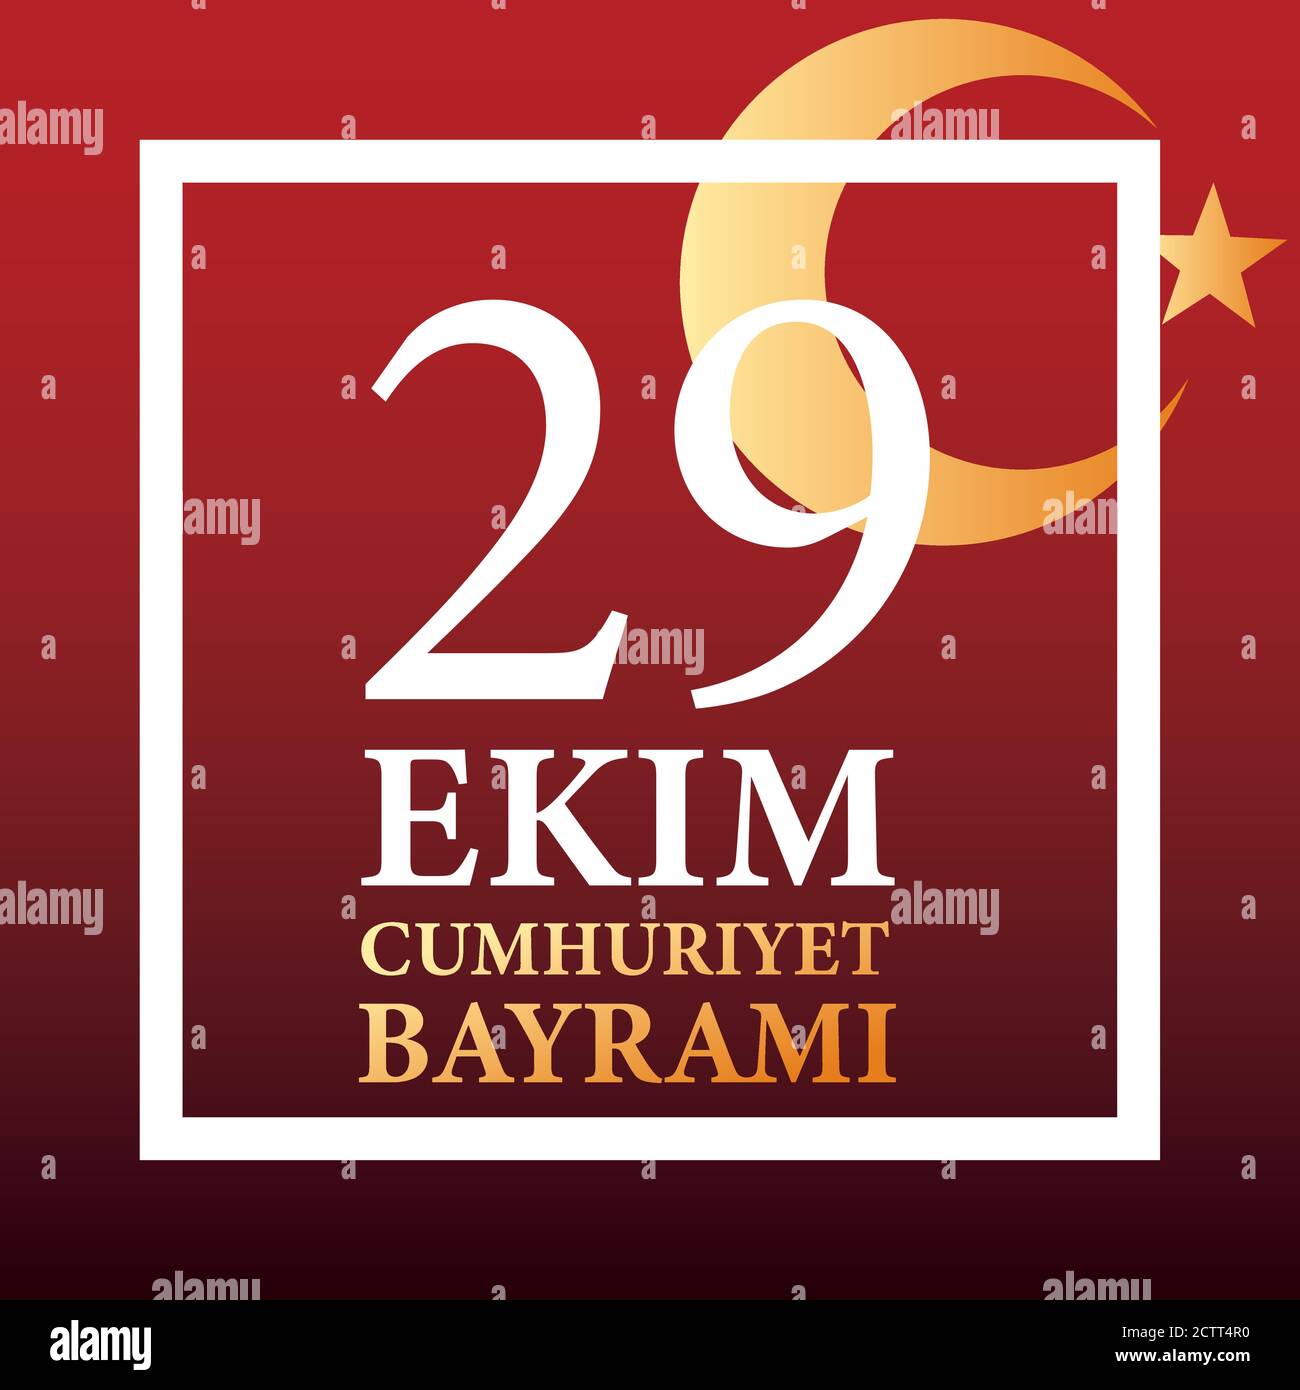 29 ekim cumhuriyet bayrami in frame with turkish moon with star design, Turkey and republic theme Vector illustration Stock Vector